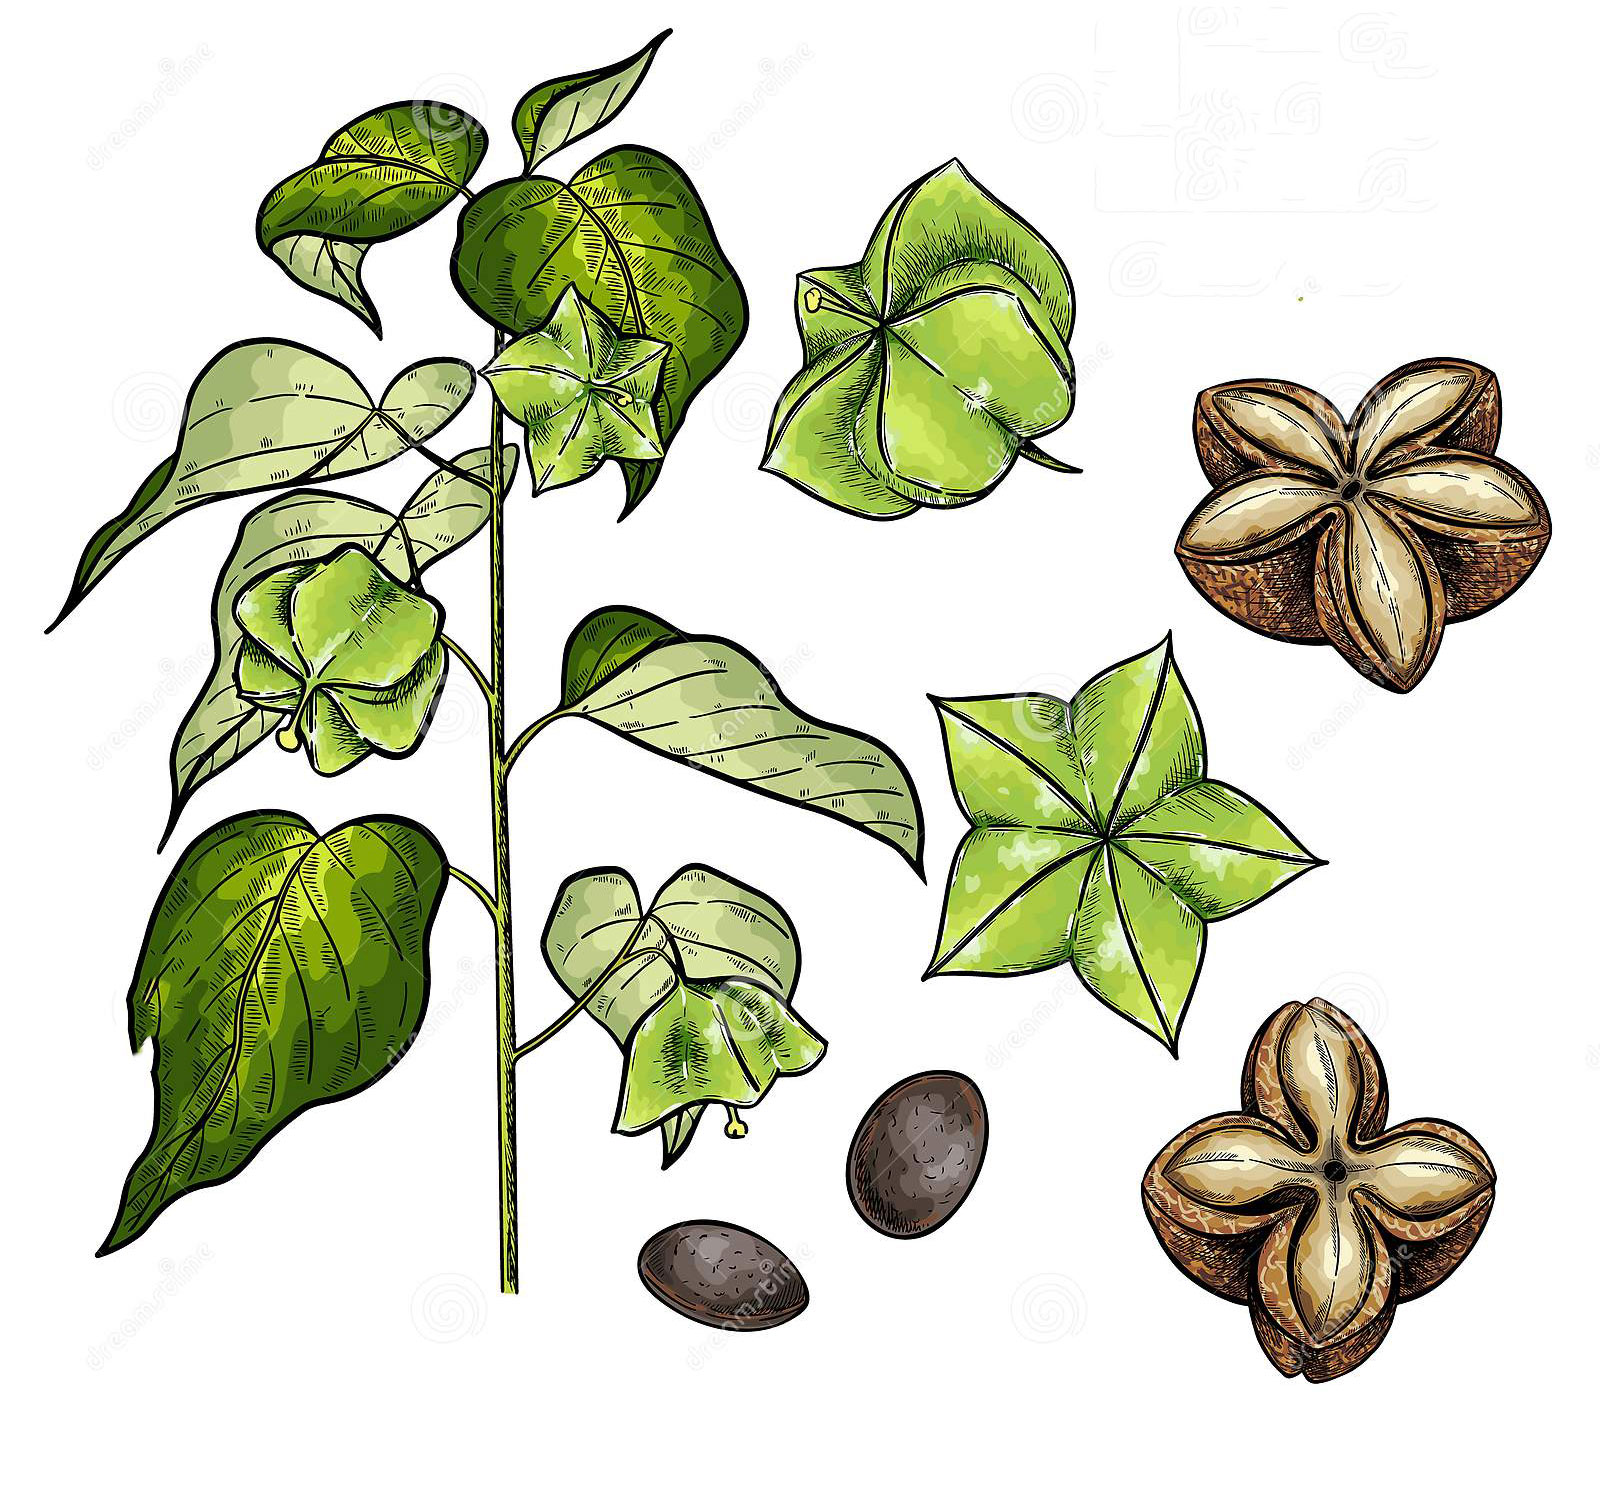 Plant-Illustration-of-Sacha-Inchi